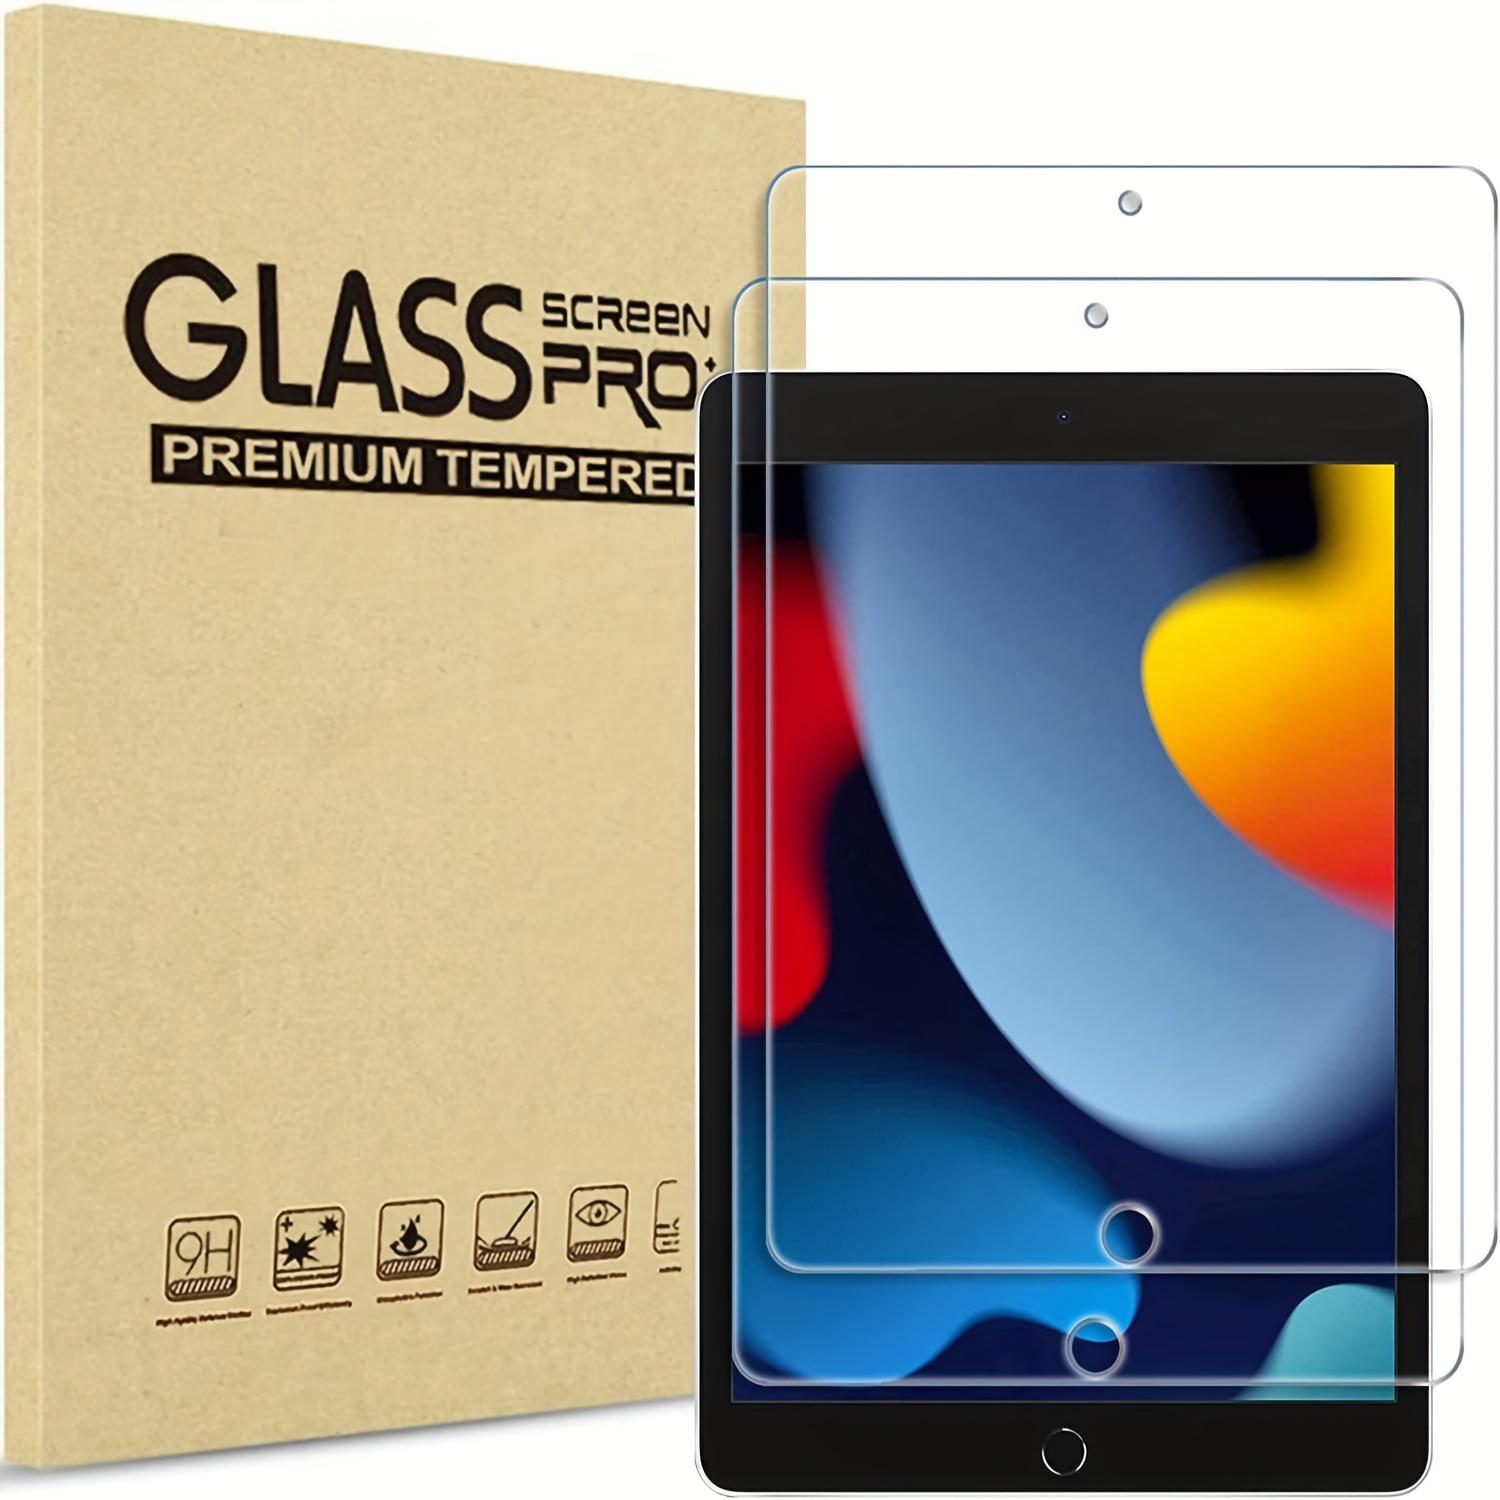 GLASS Screen PRO + Premium Tempered Glass 10 Inch